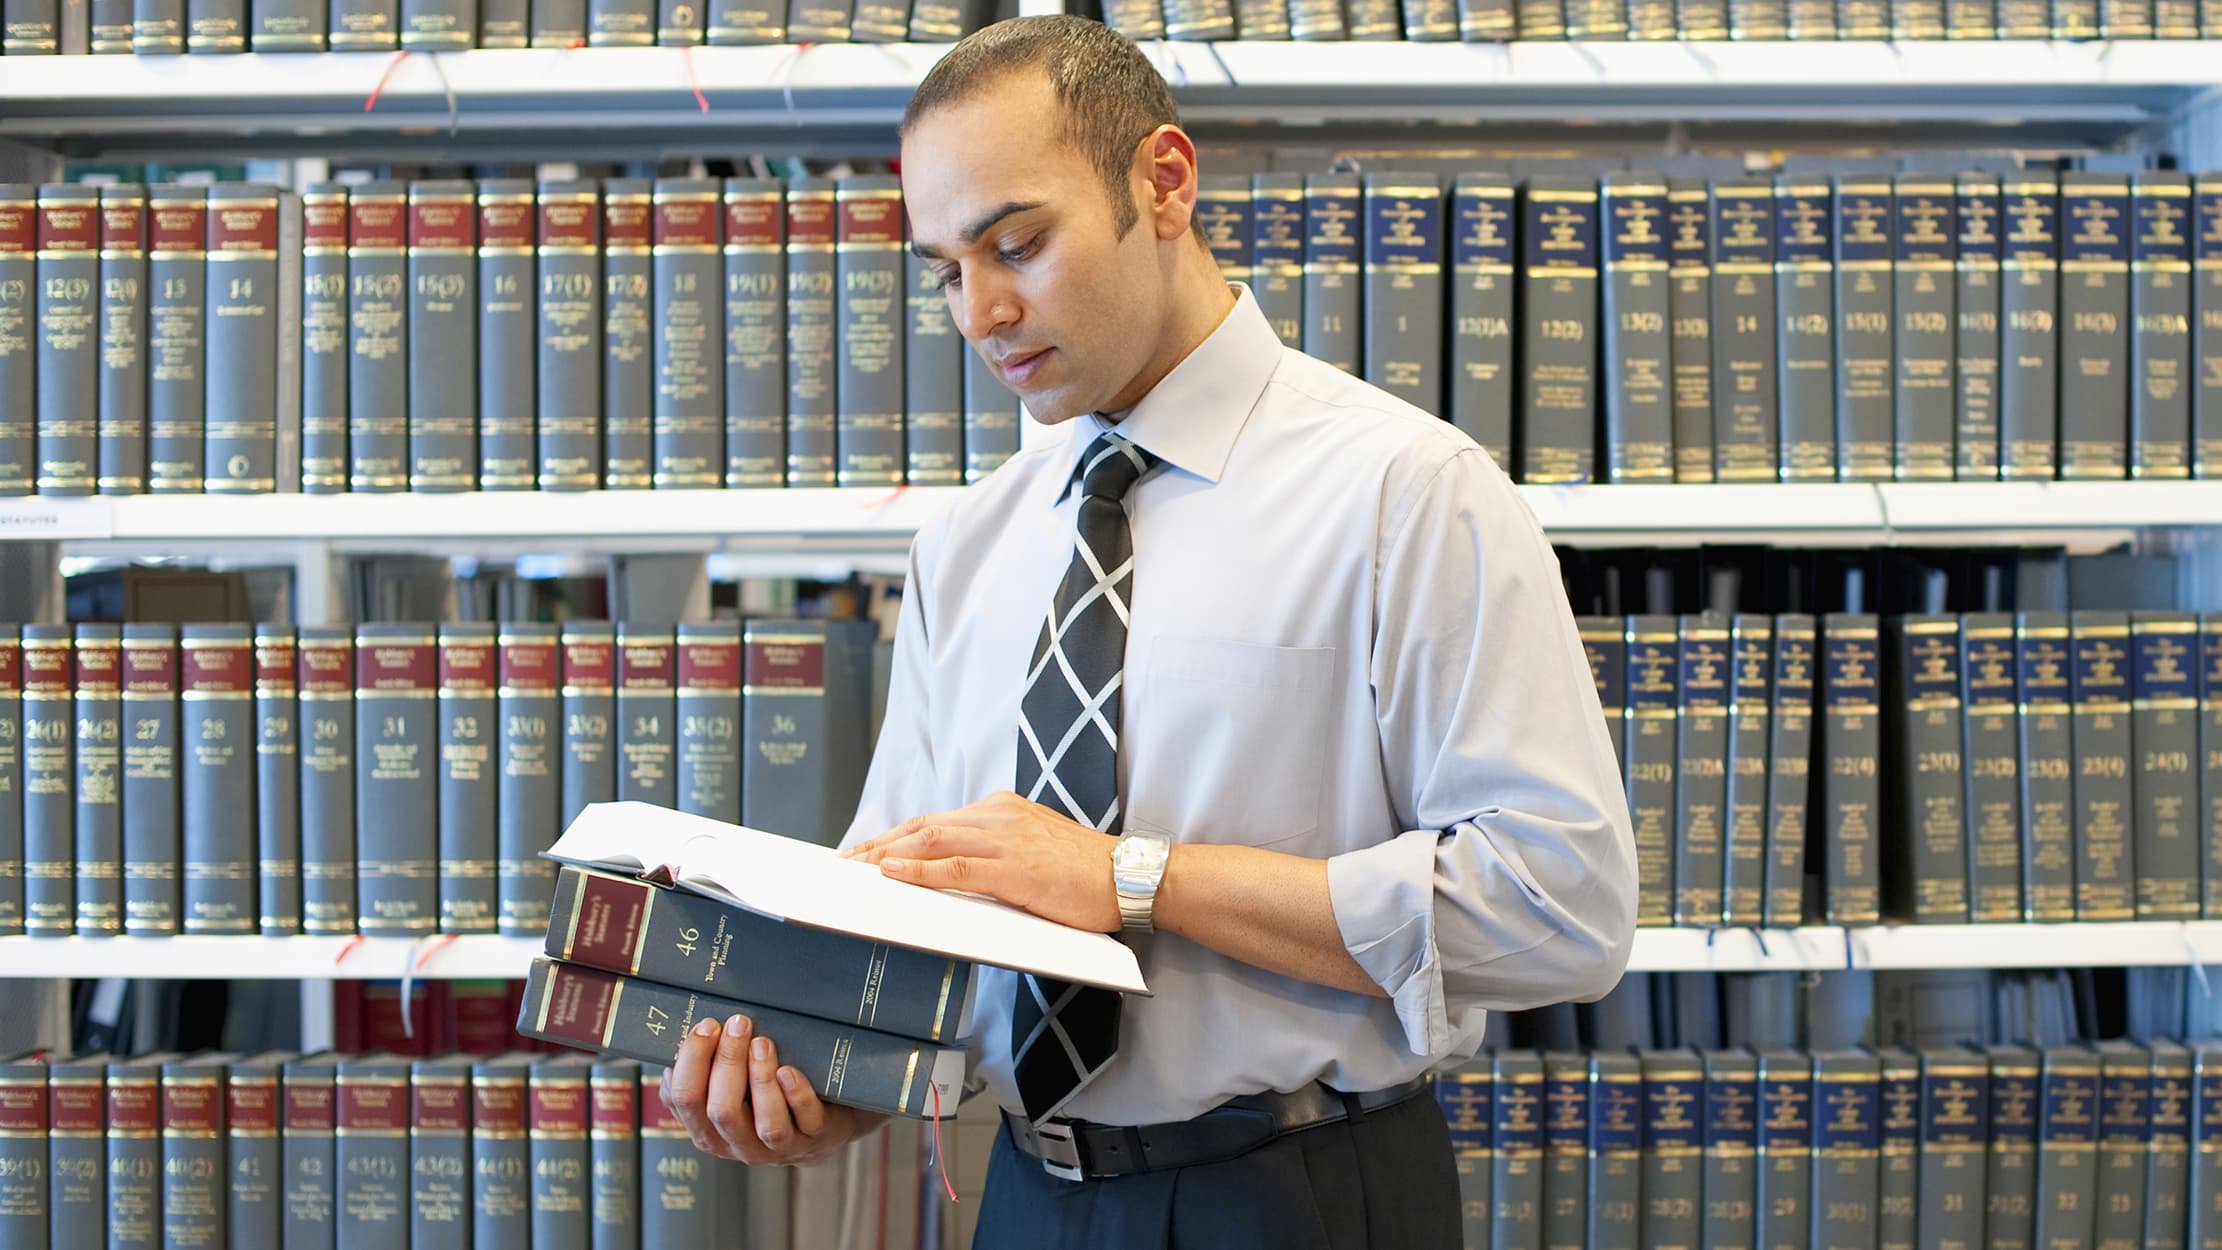 A lawyer going through his book shelf